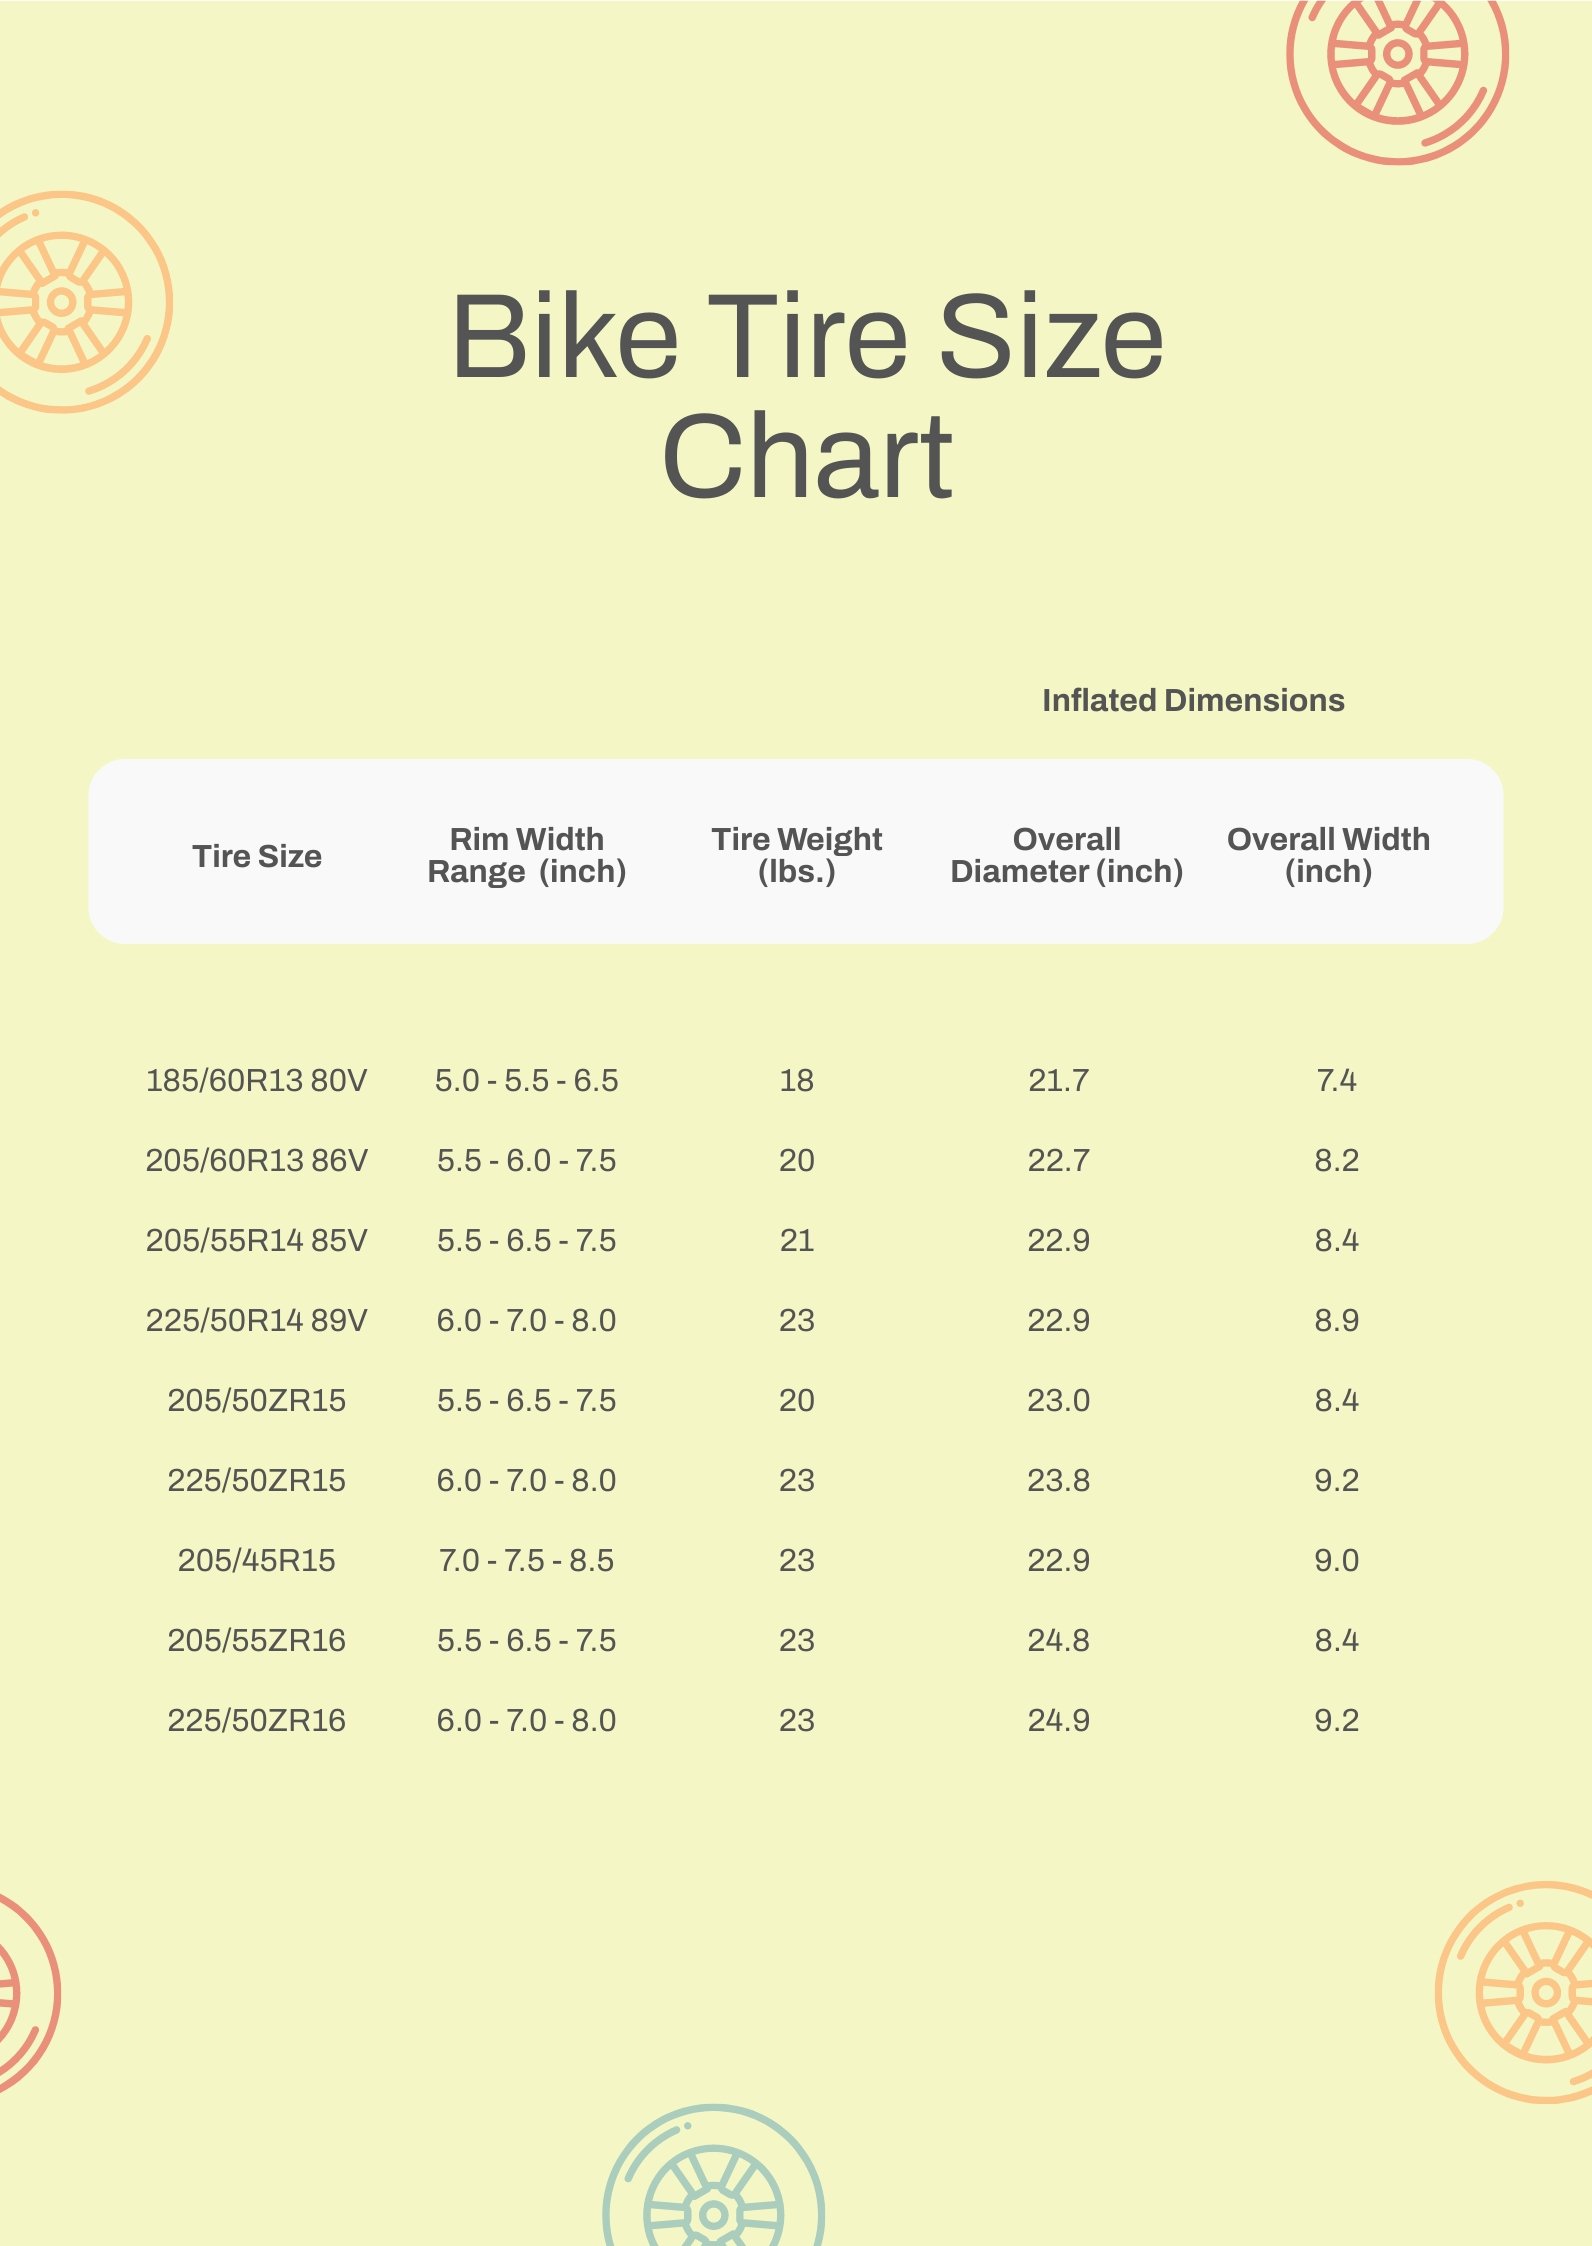 Bike Tire Size Chart in PDF